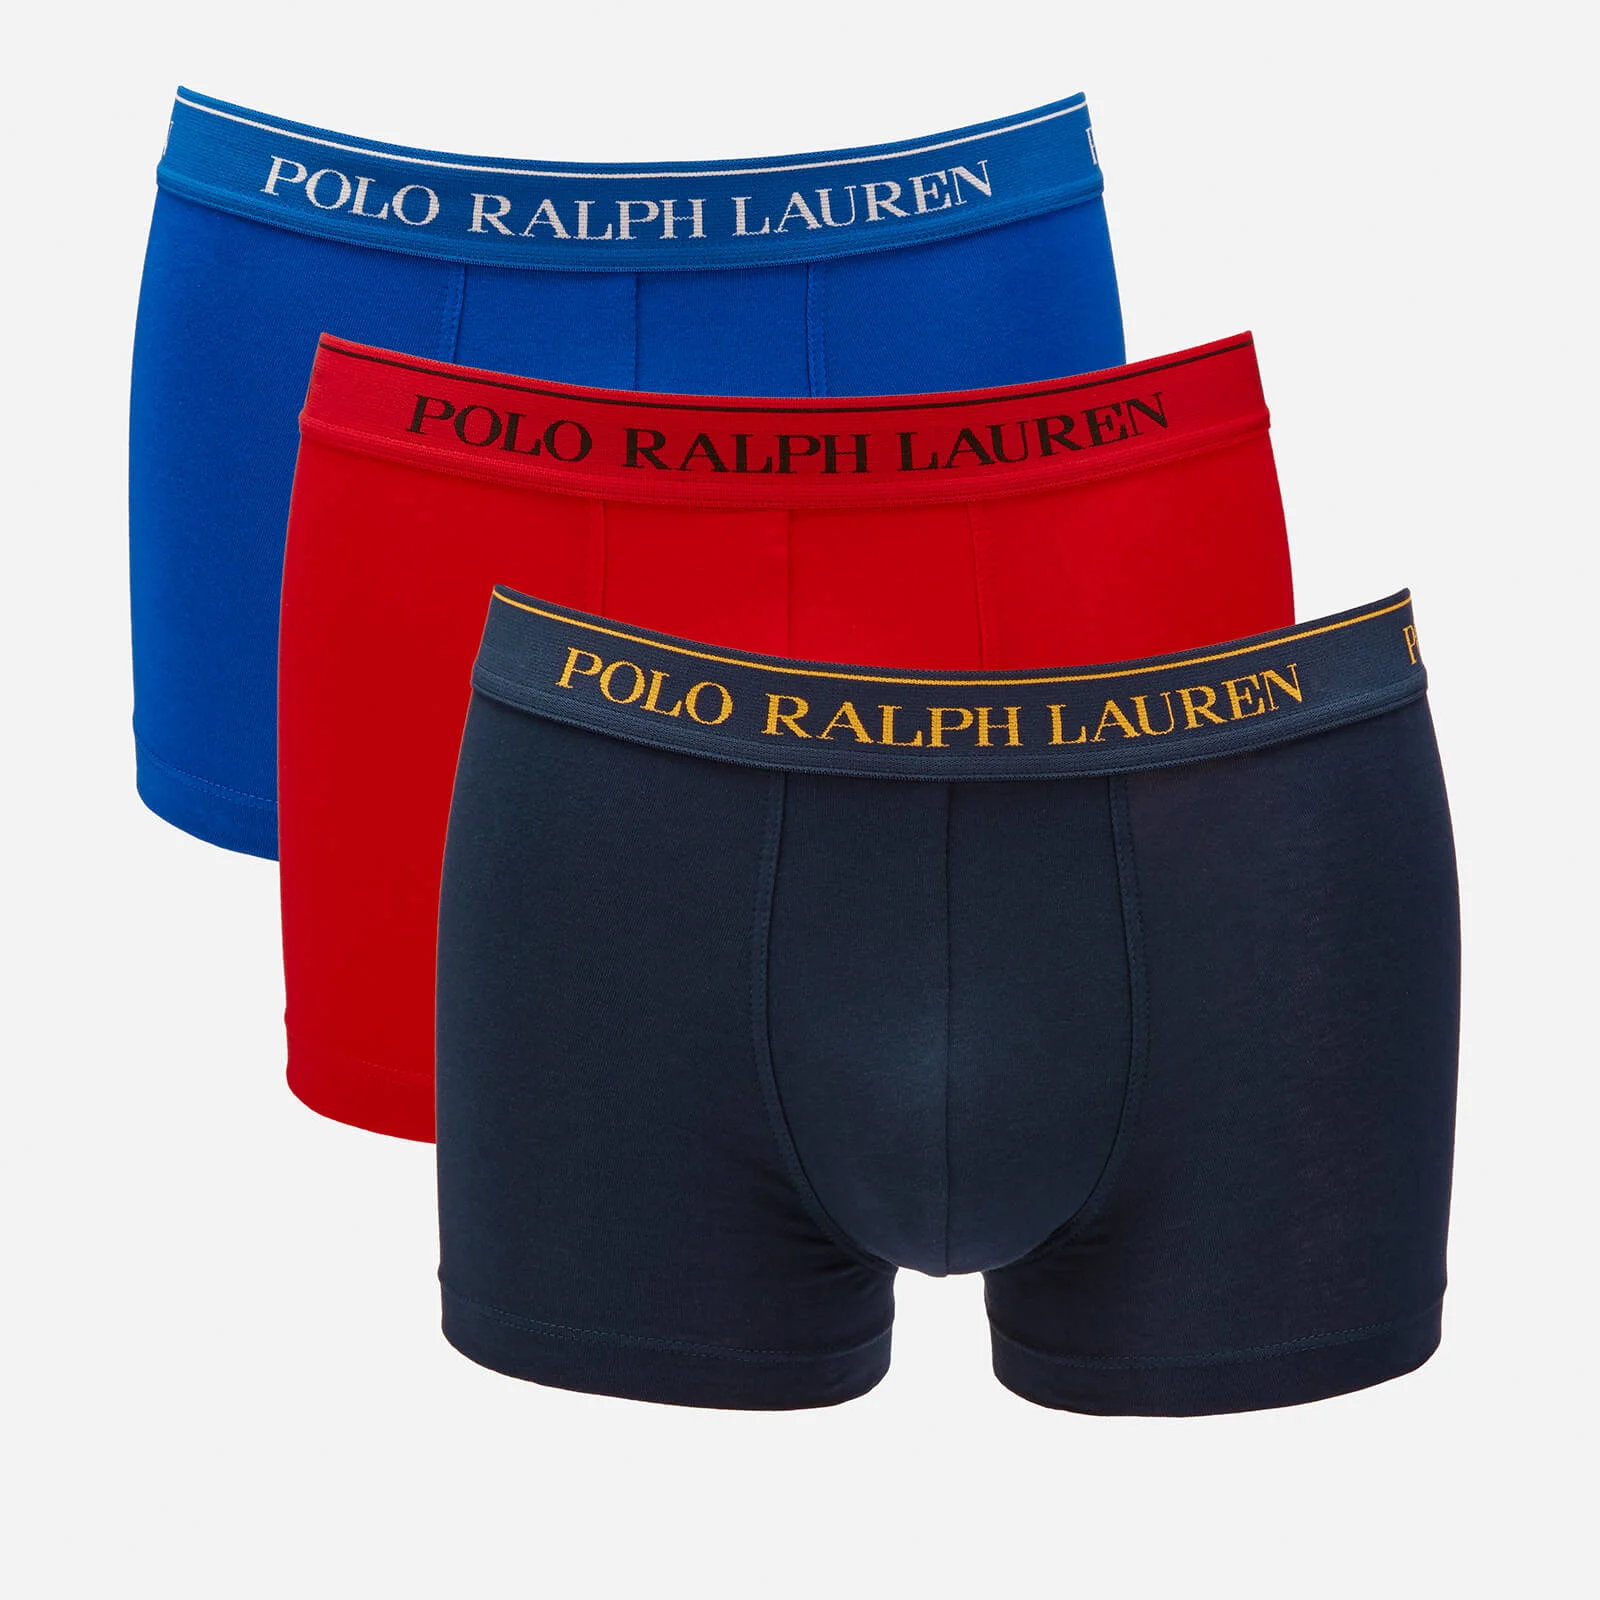 Polo Ralph Lauren Men's 3 Pack Classic Trunk Boxer Shorts - Rl Red/Sapphire Star/Navy Image 1